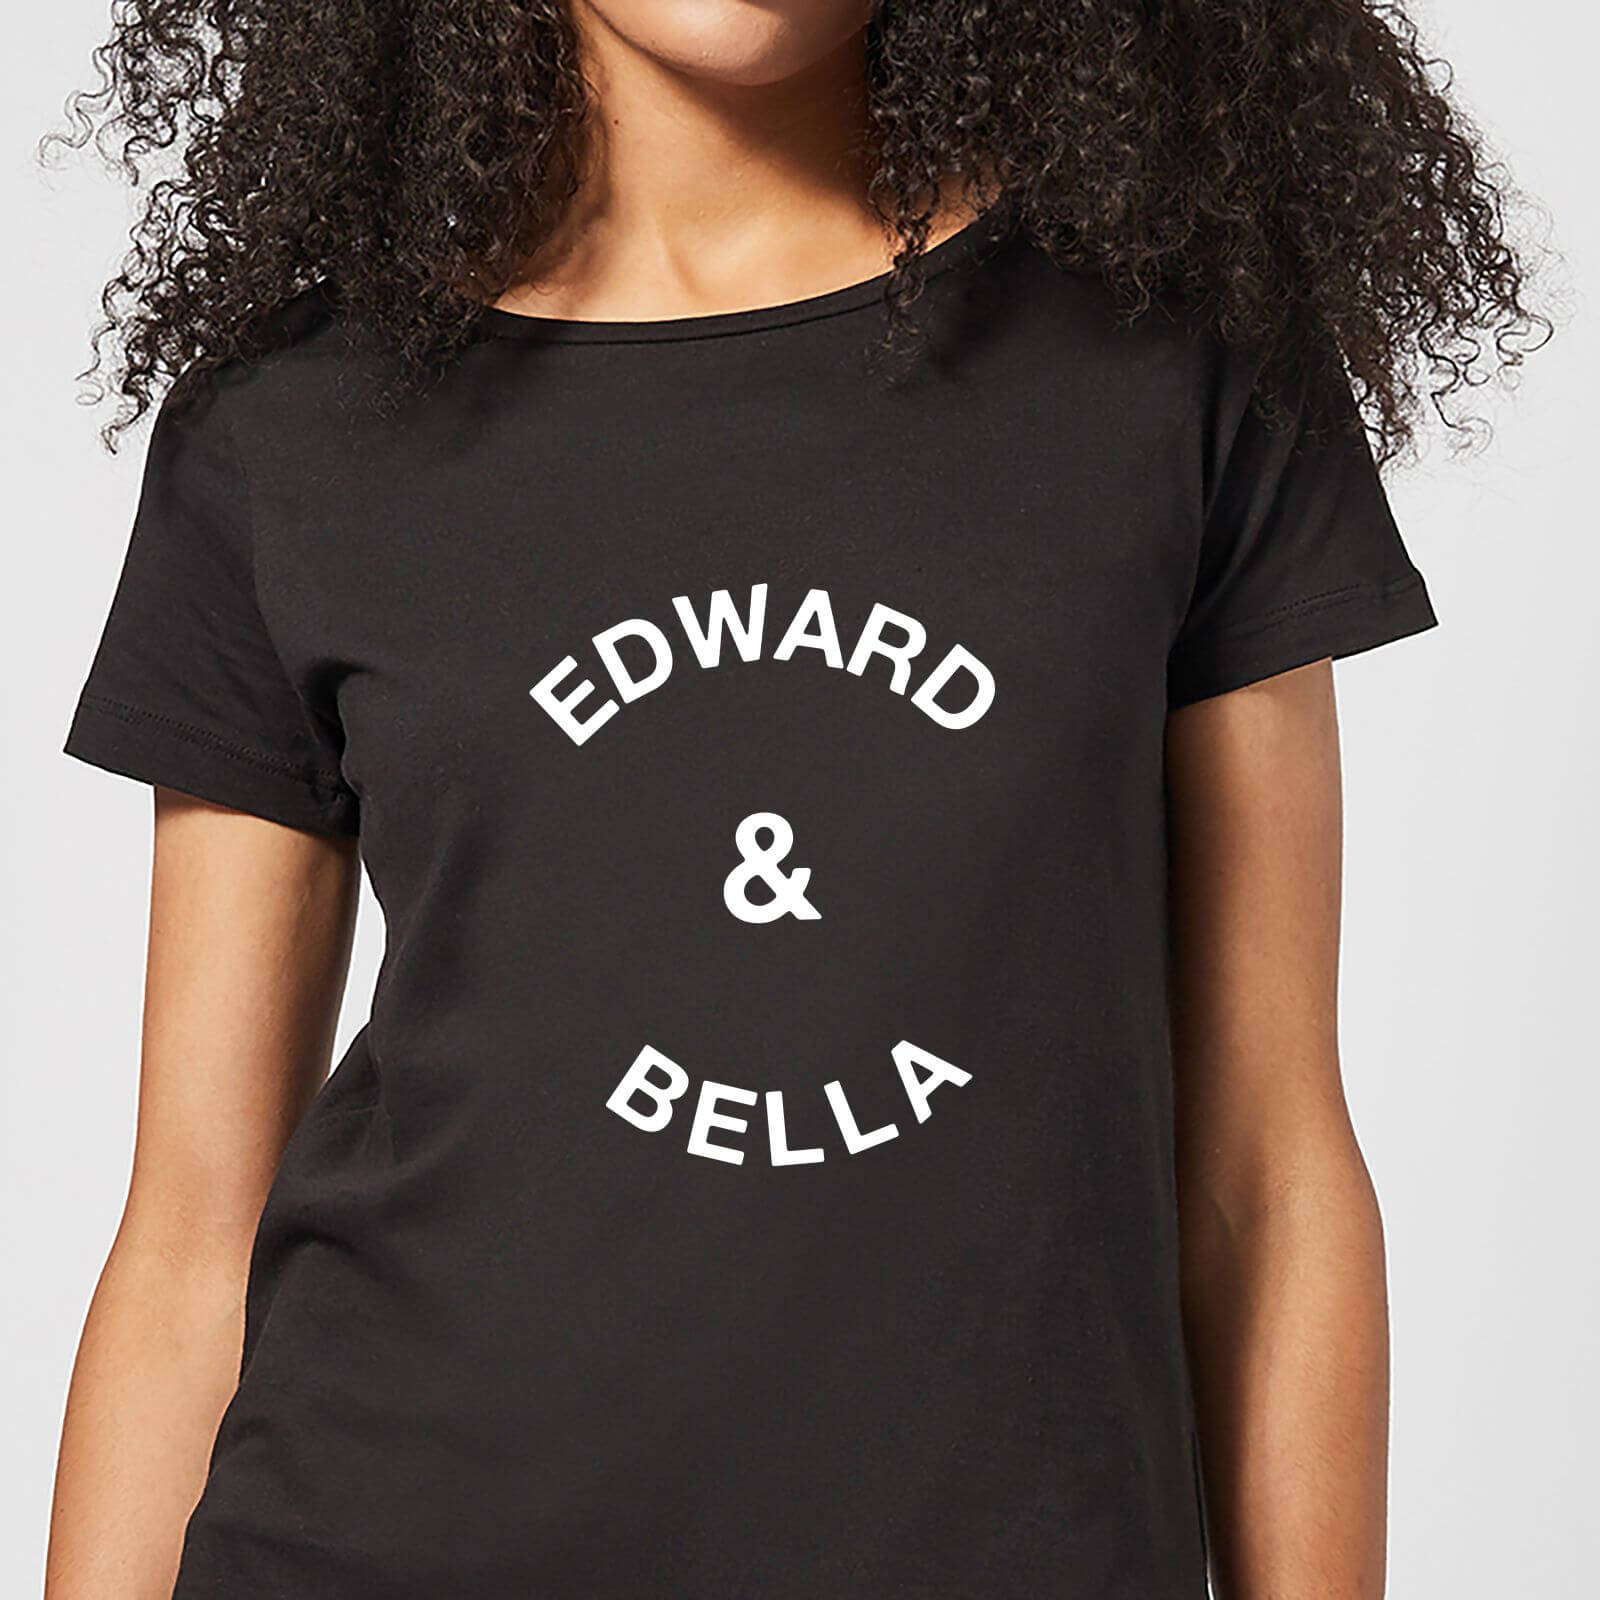 Edward & Bella Women's T-Shirt - Black - S - Black